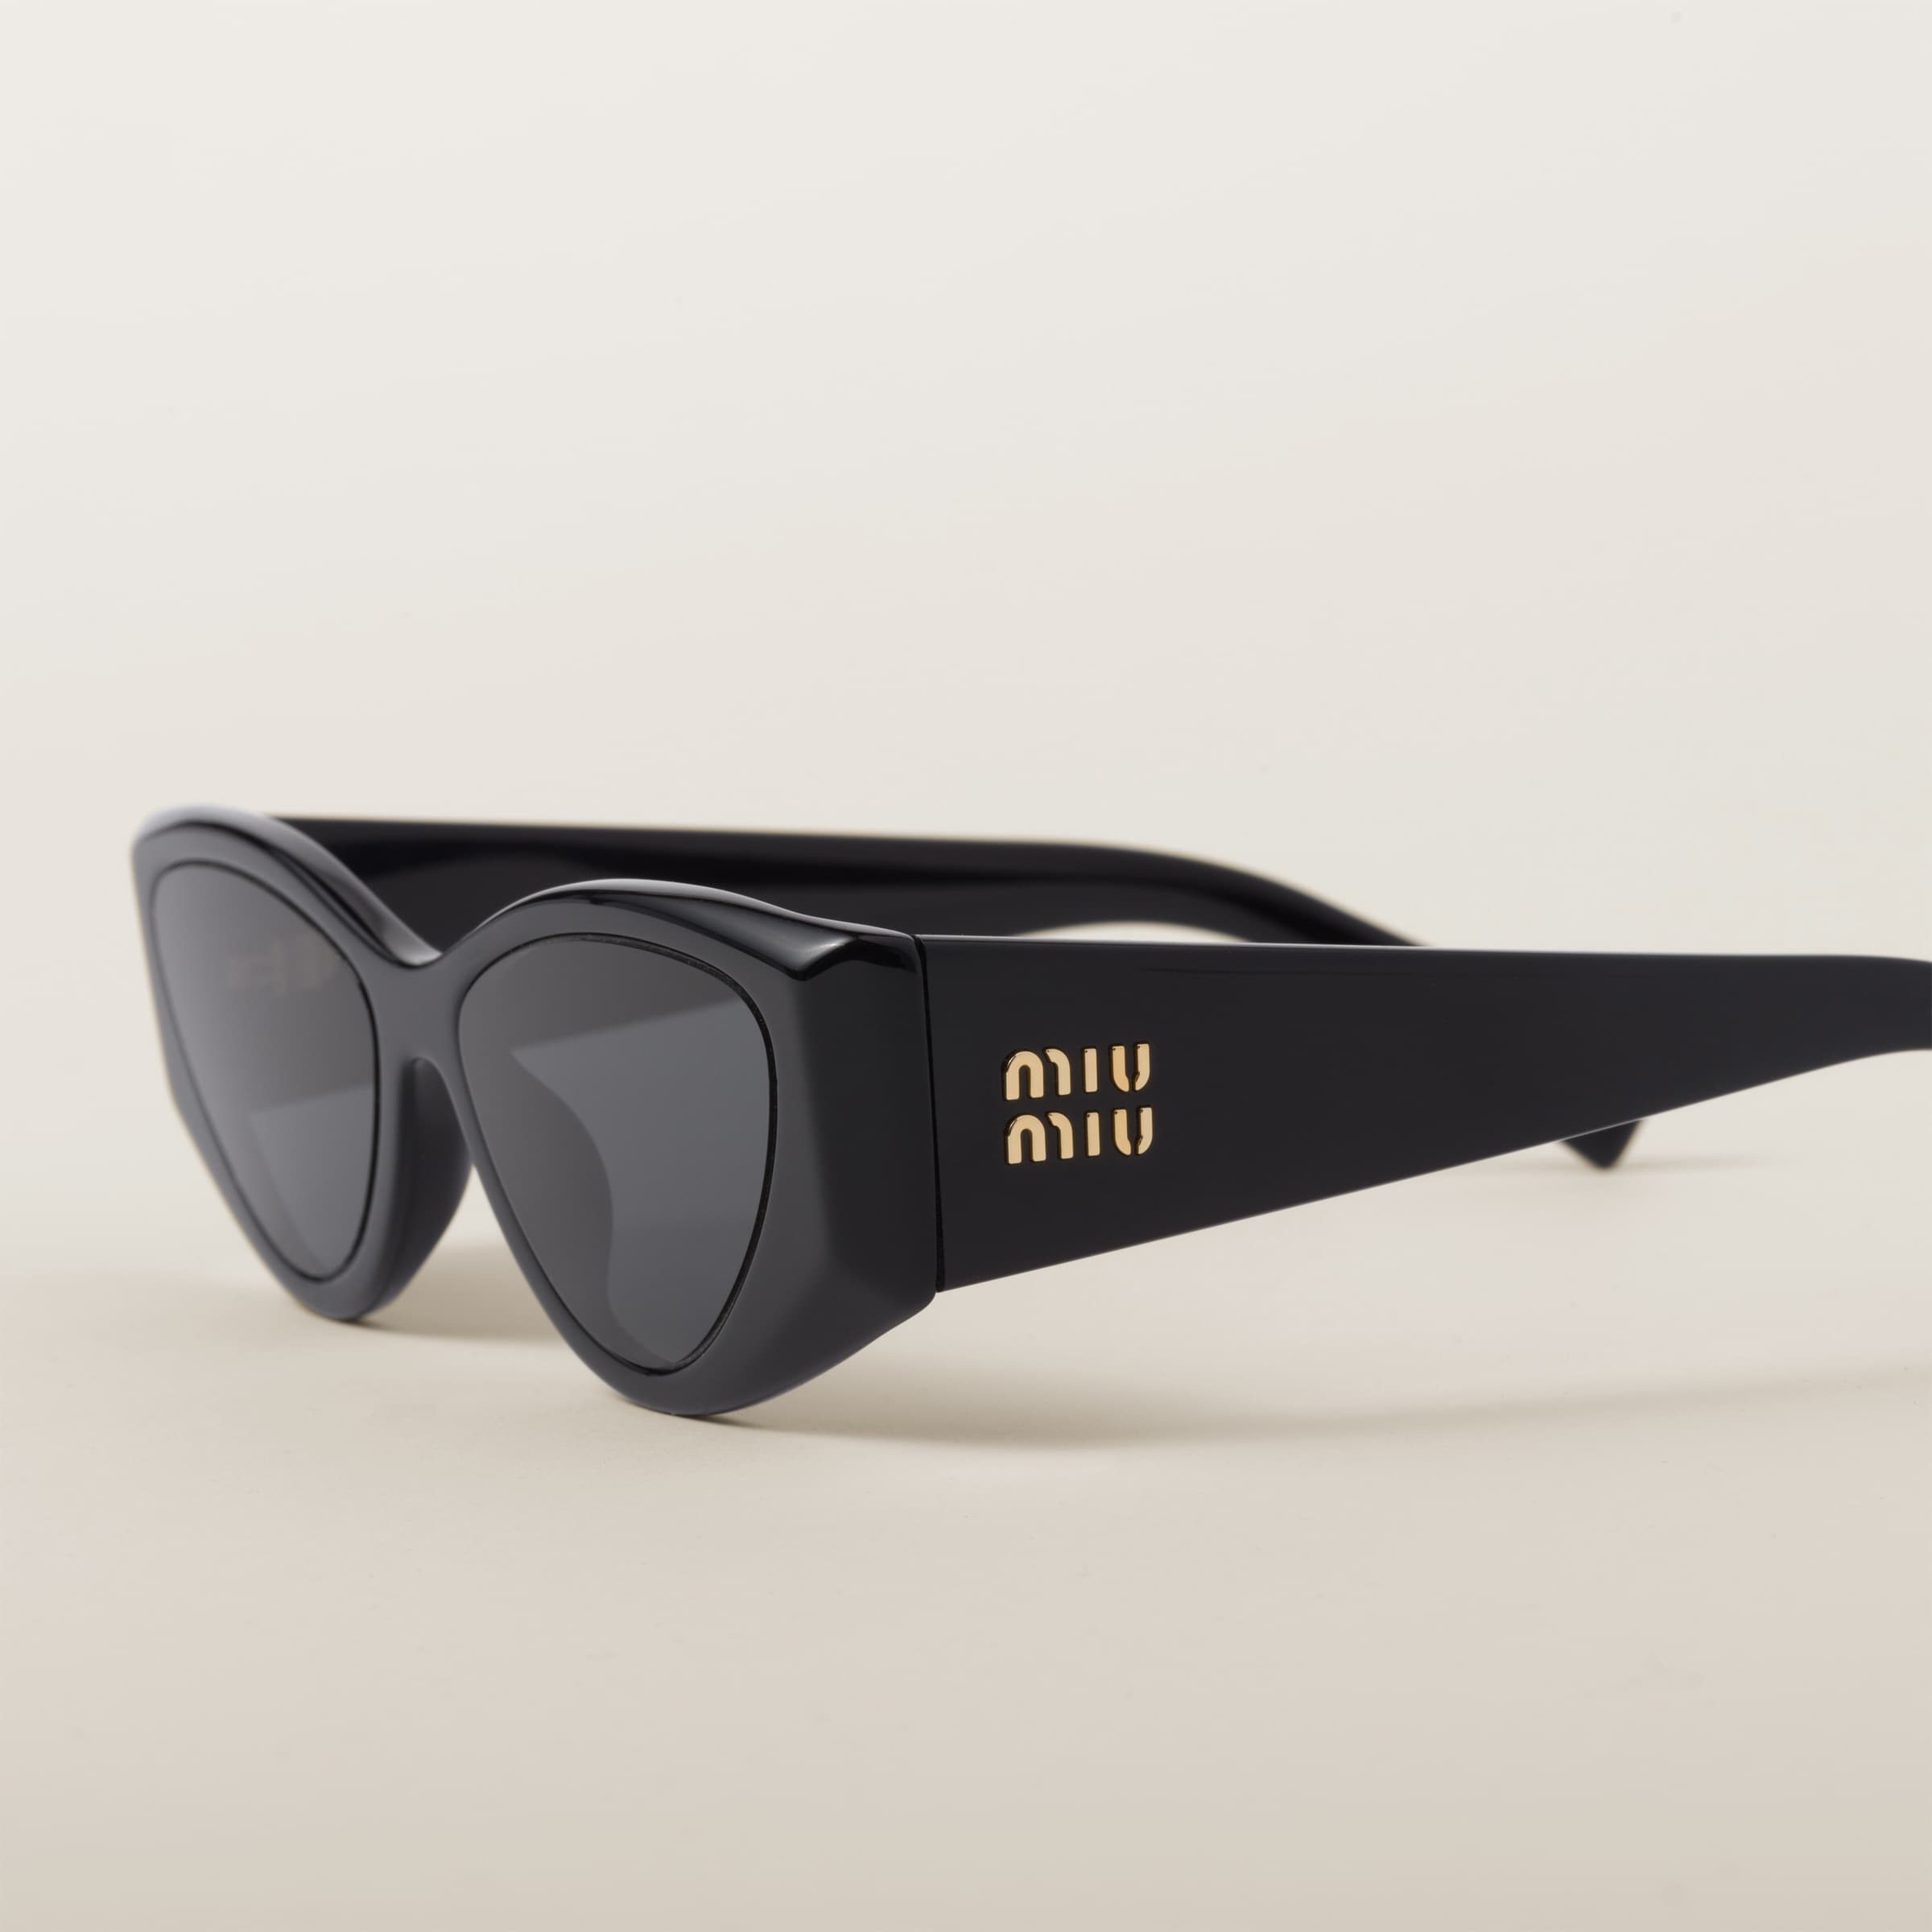 Miu Miu Logo sunglasses - 5